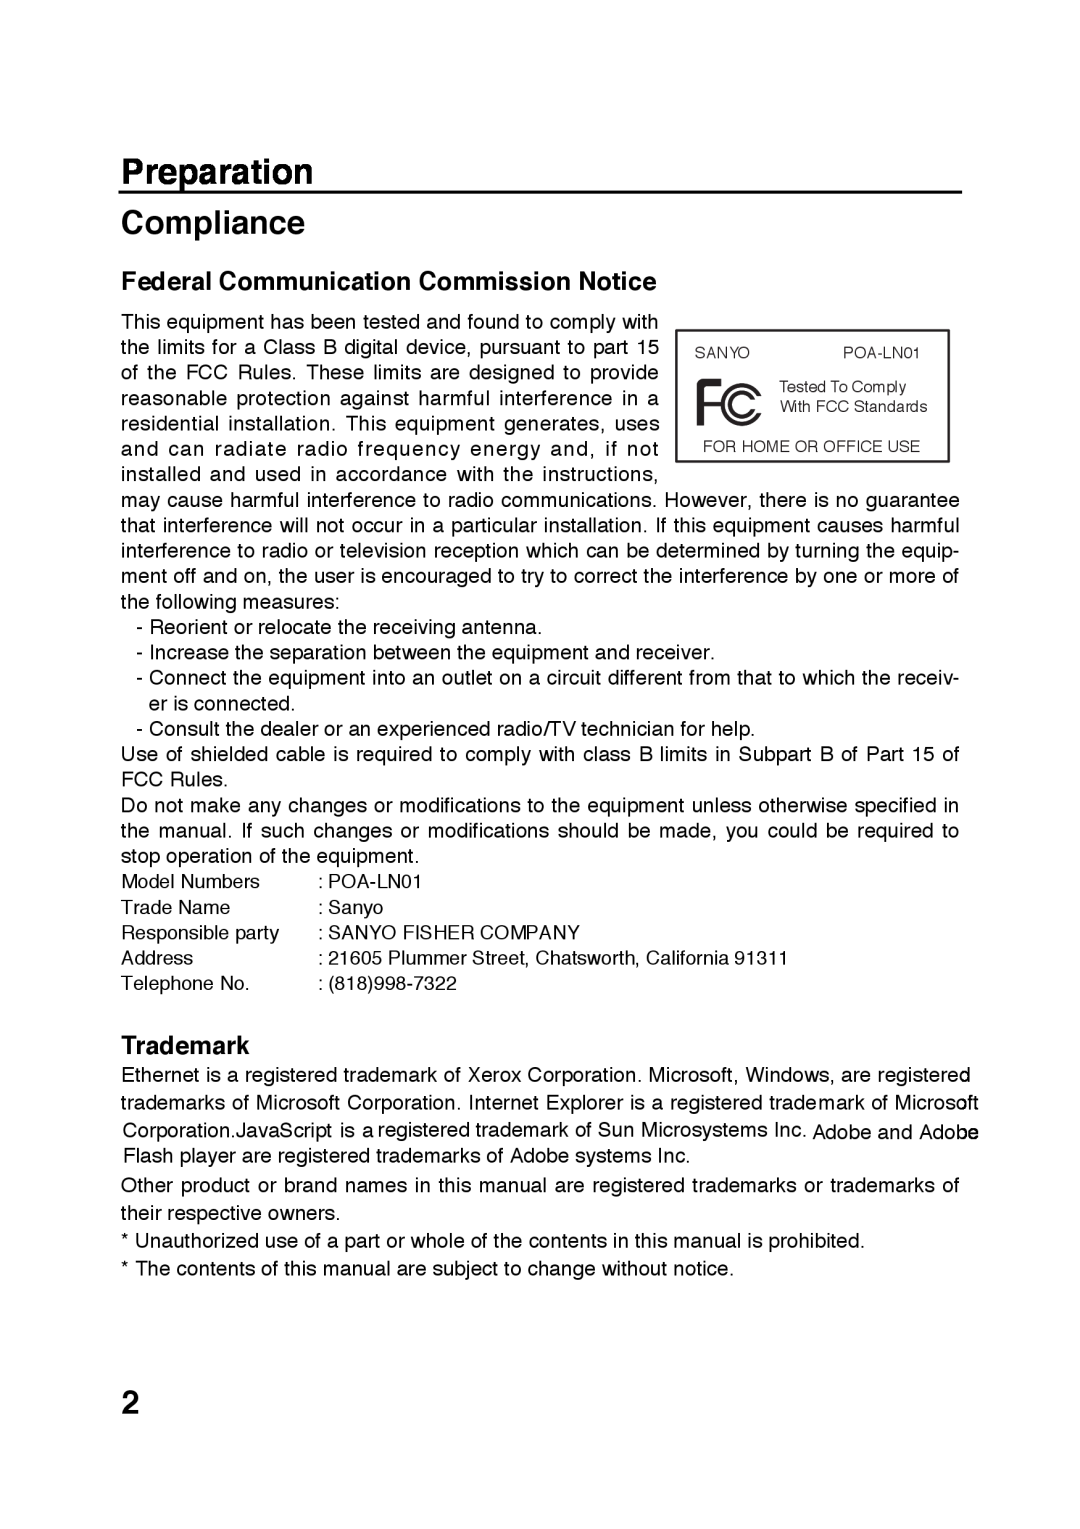 Sanyo POA-LN01 appendix Preparation, Compliance, Federal Communication Commission Notice, Trademark 